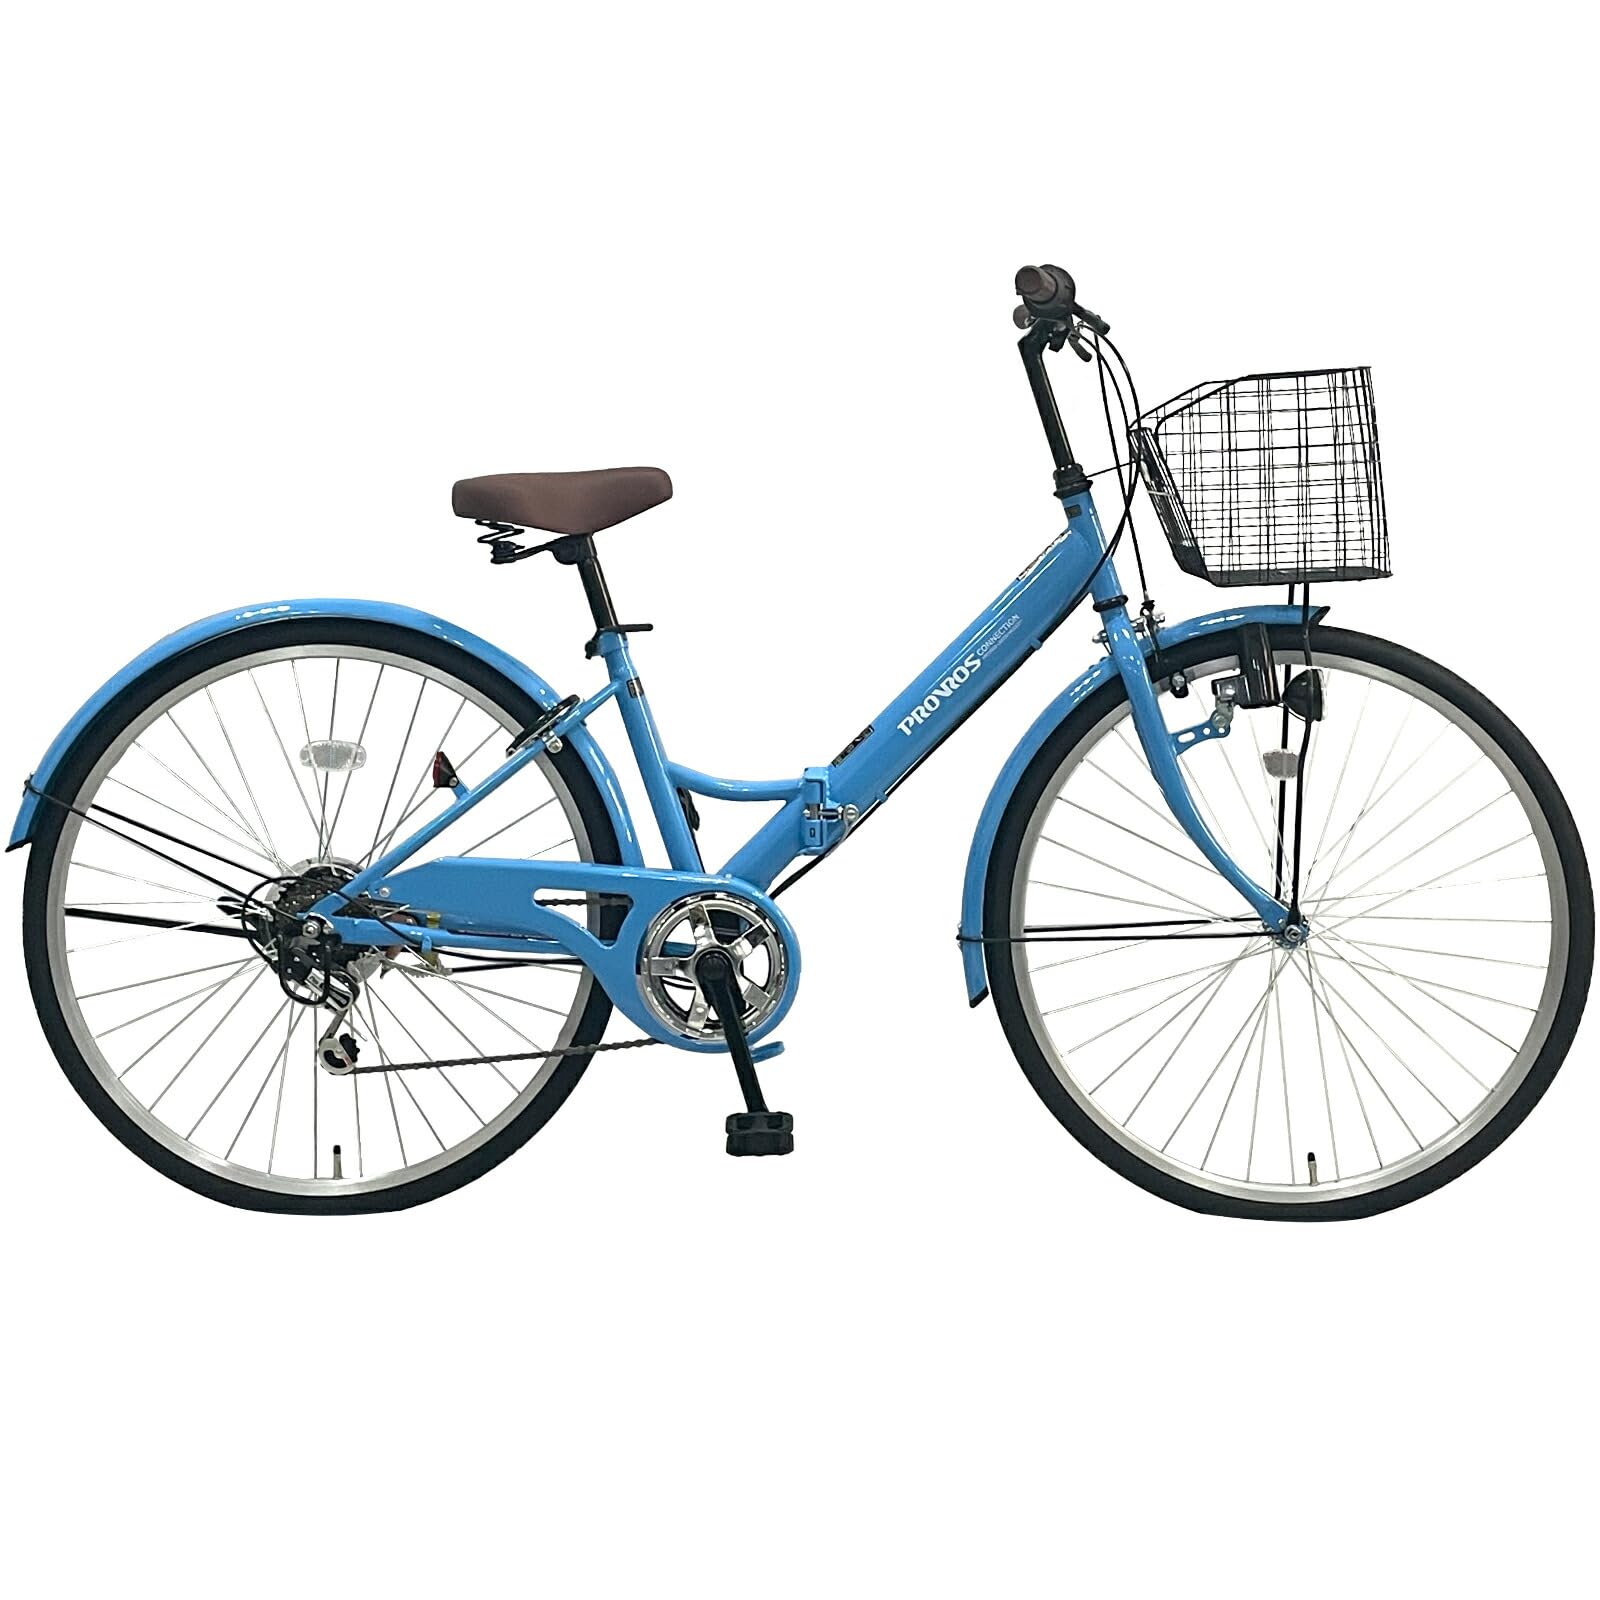 PROVROS(プロブロス) シティサイクル 折りたたみ自転車 26インチ シマノ製 6段変速ギア ママチャリ カゴ 鍵 LEDライト付き